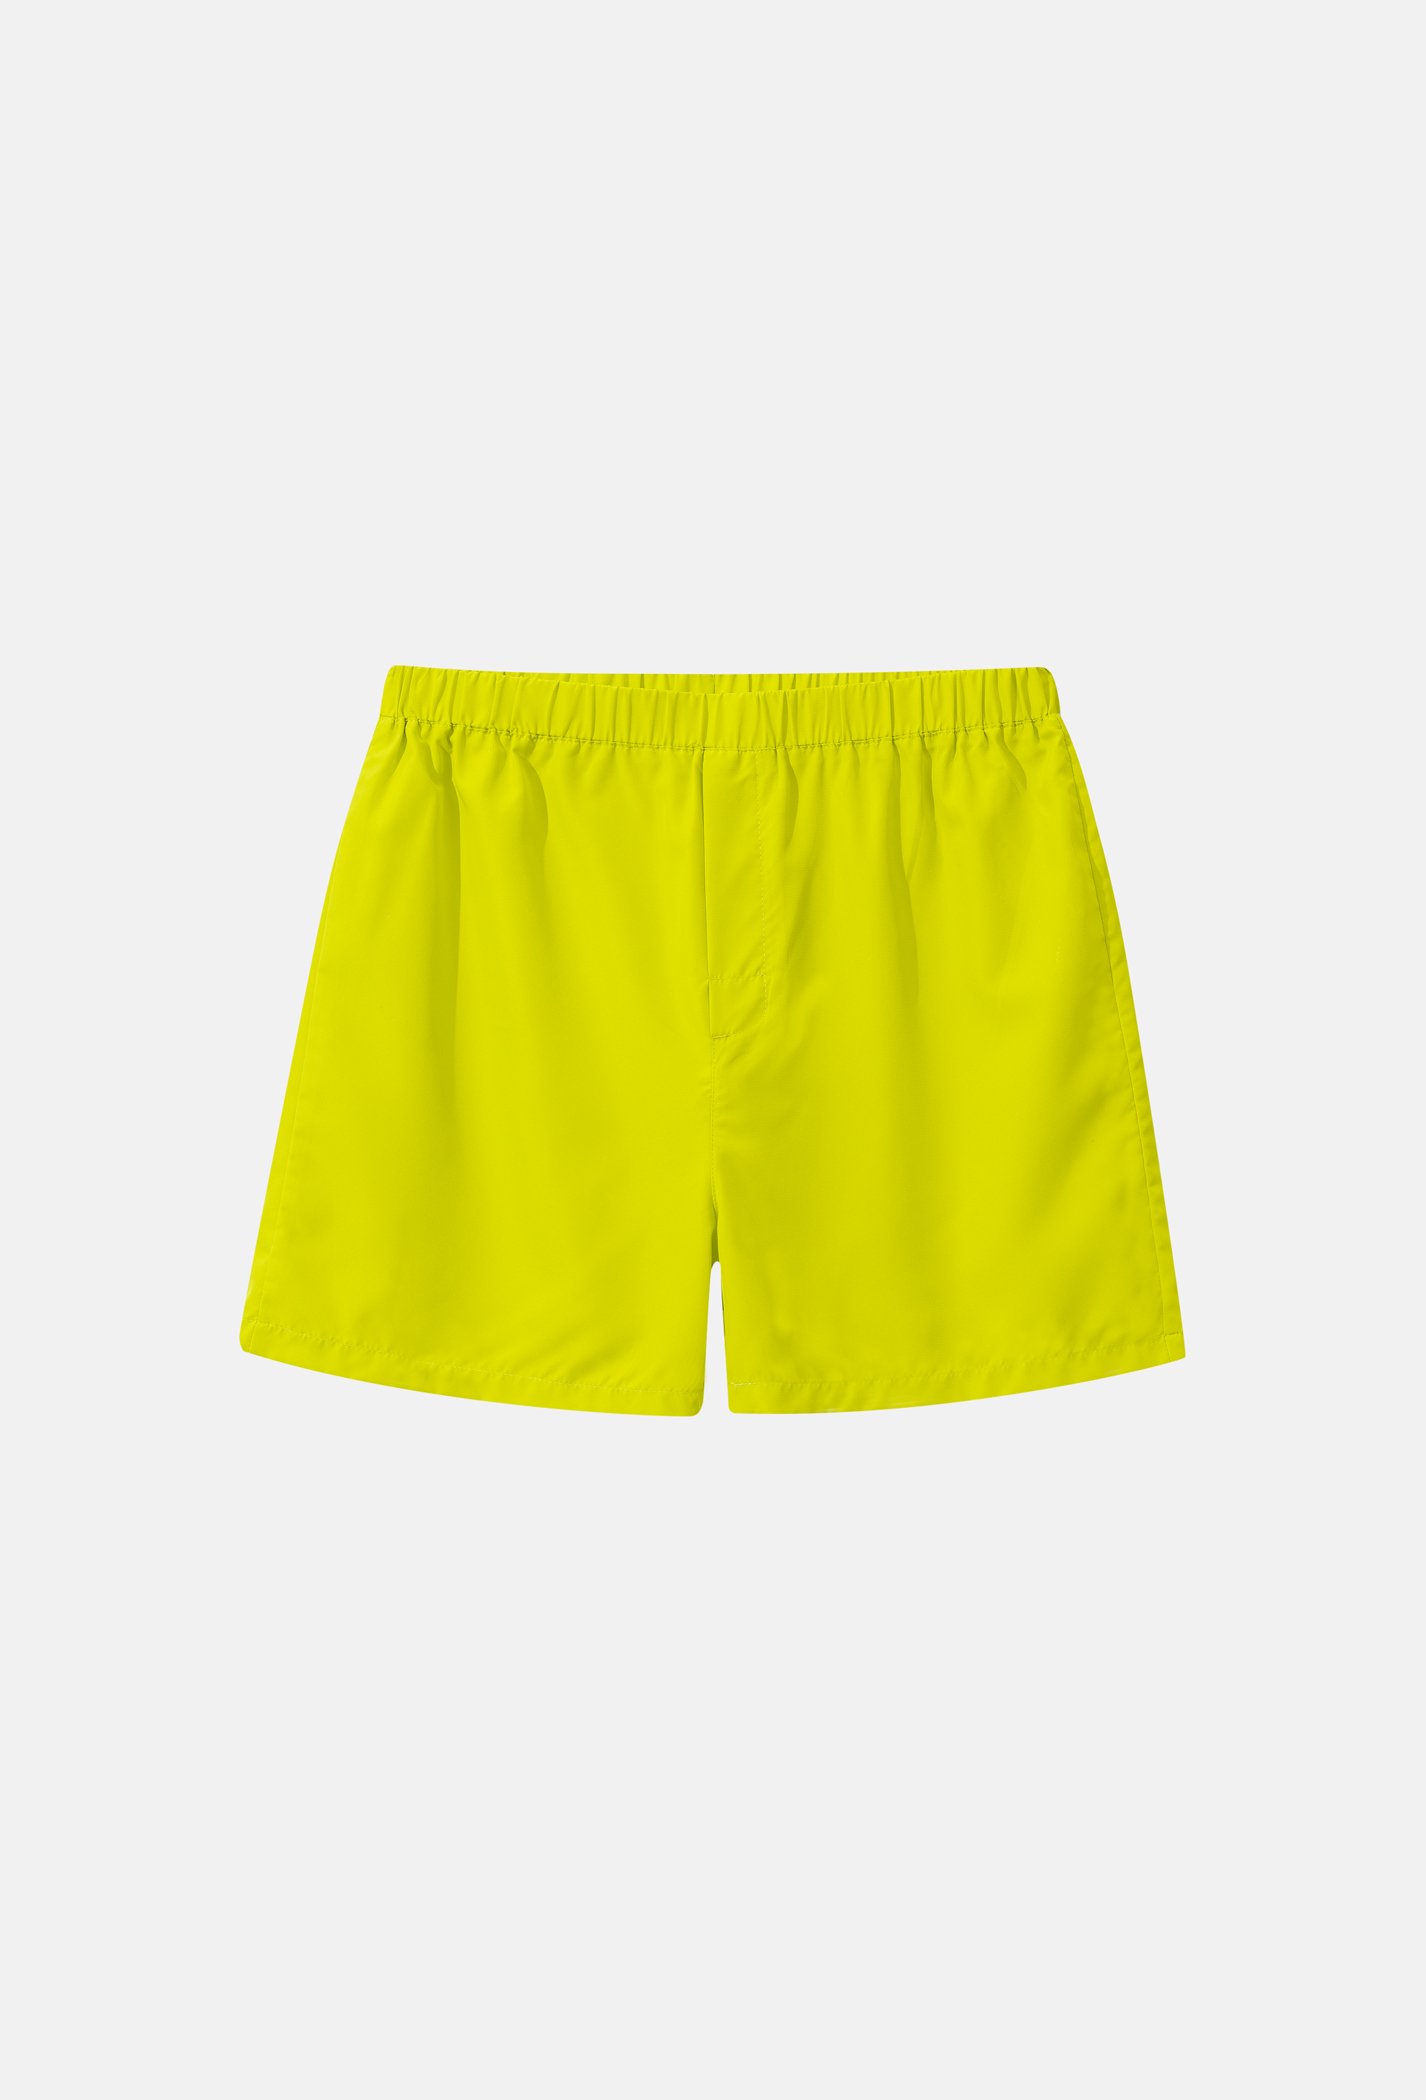 Combo 3 Shorts mặc nhà Basics  4